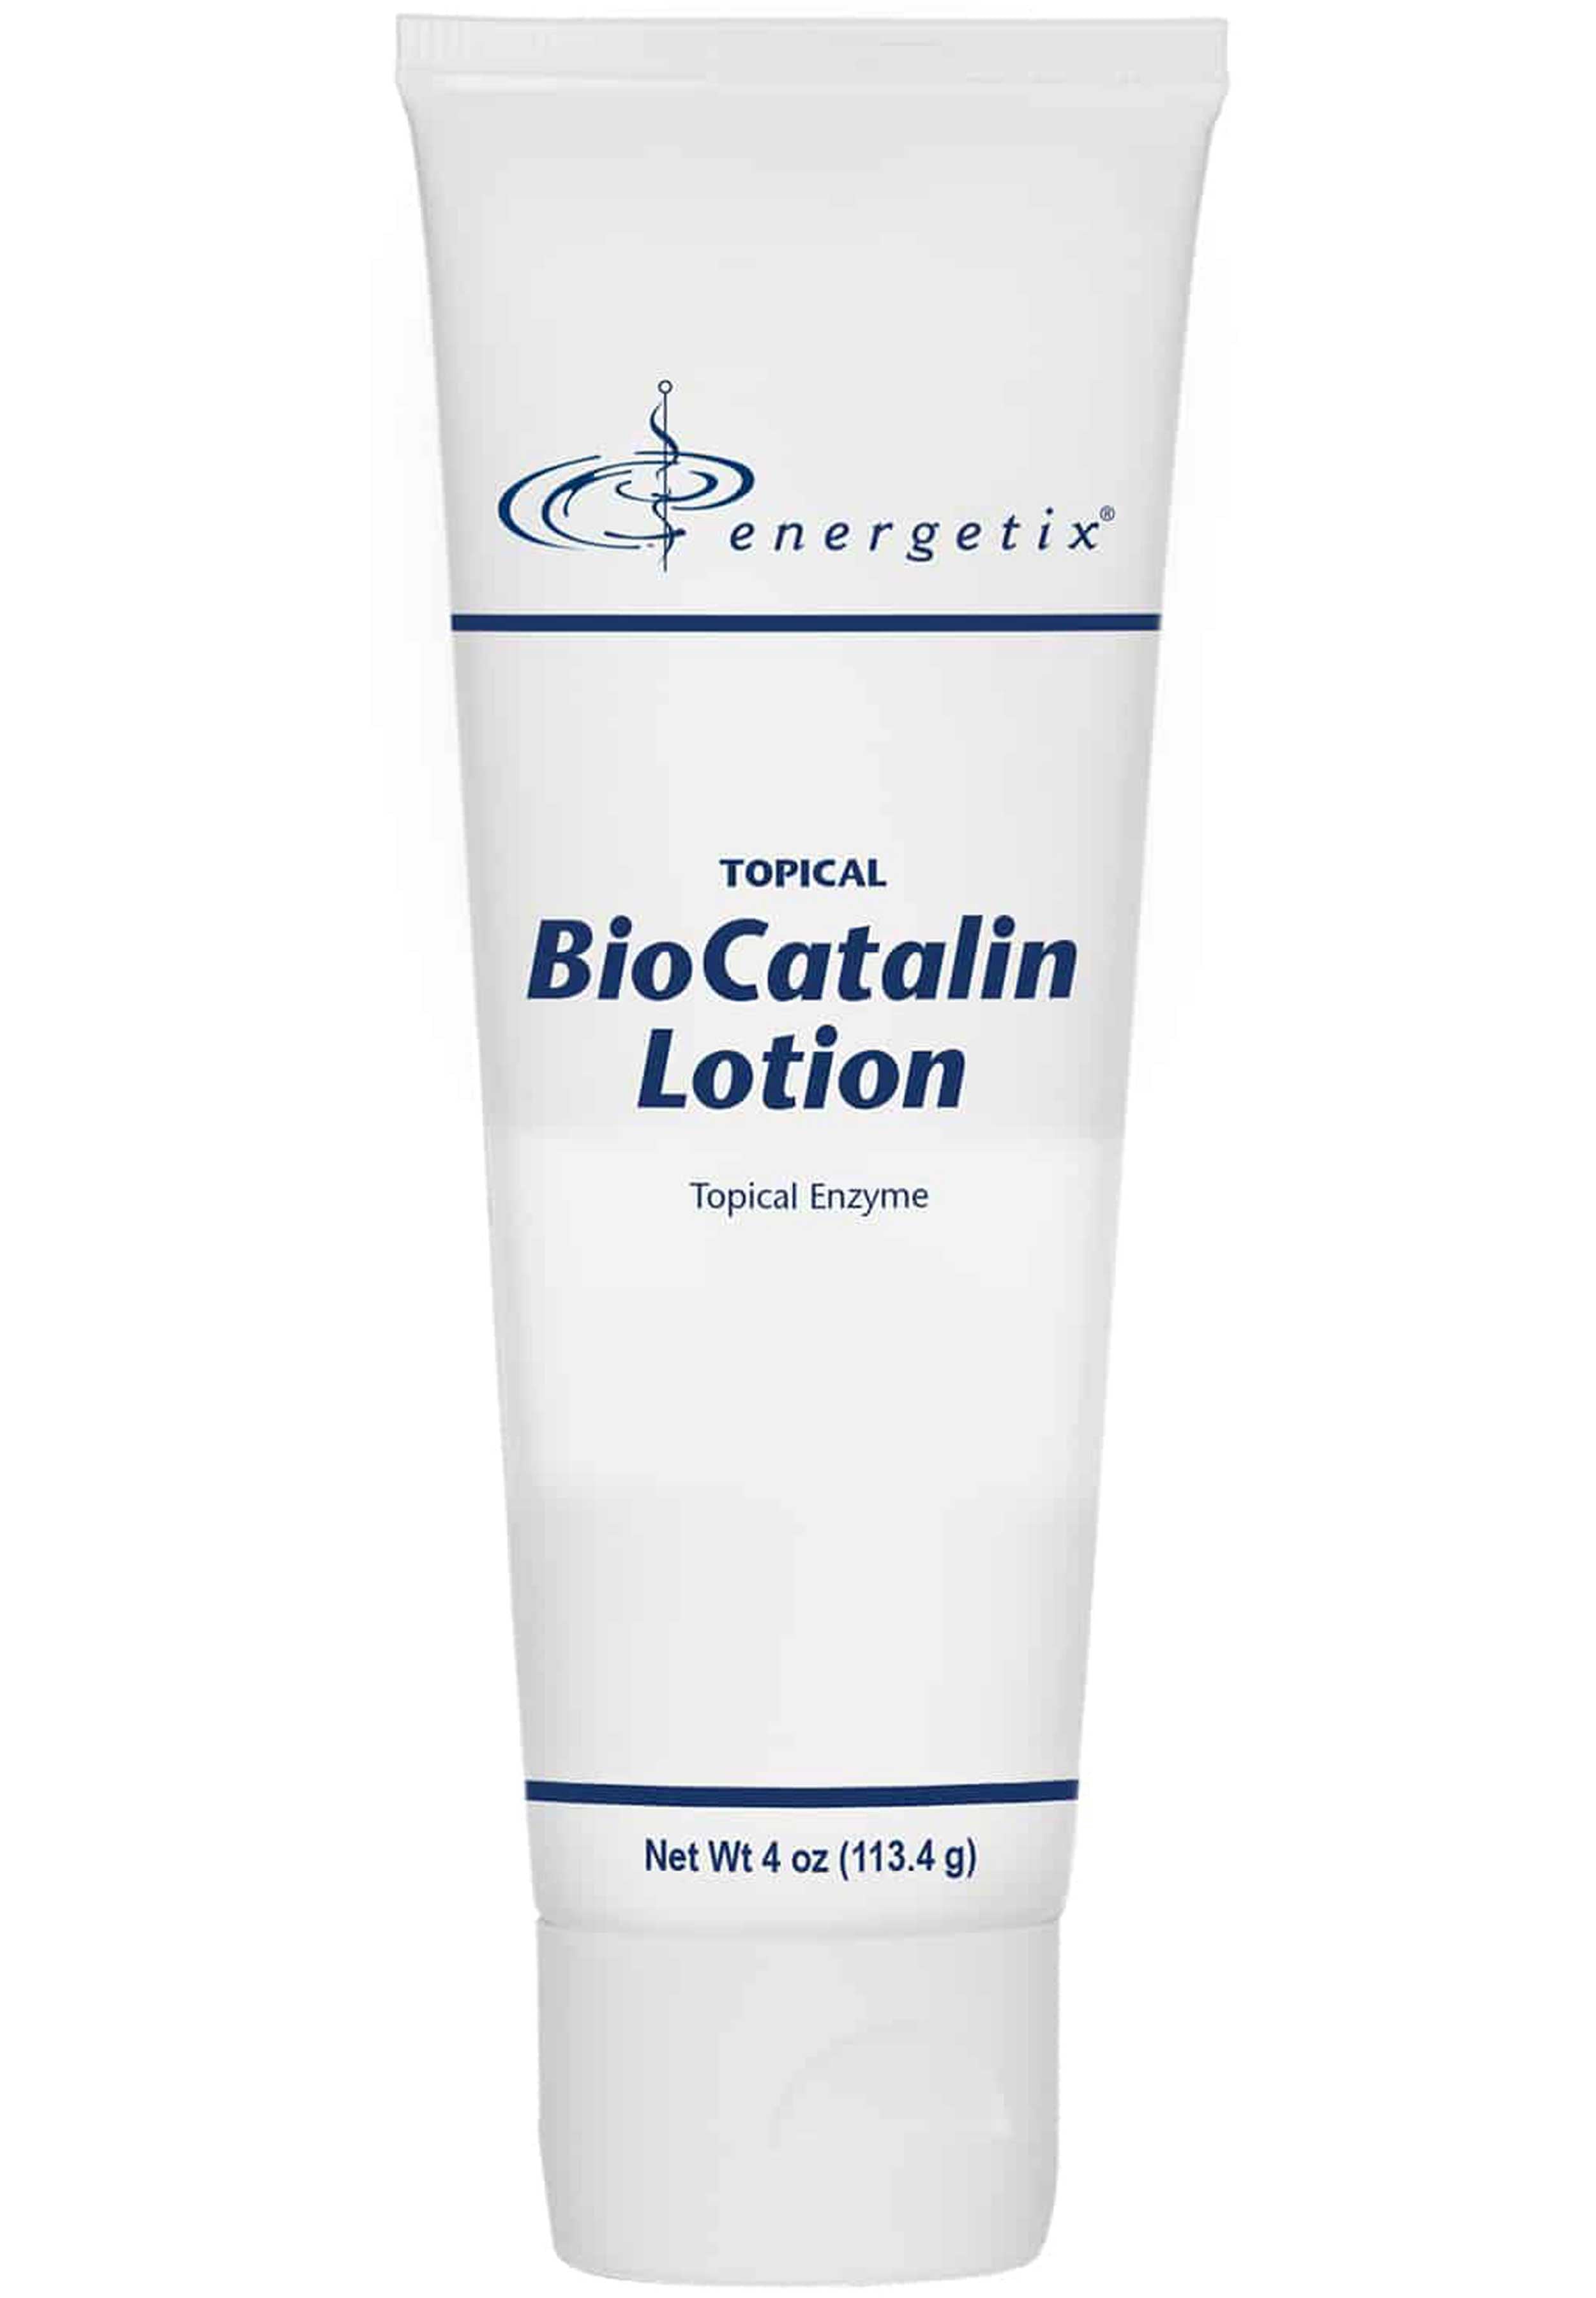 Energetix BioCatalin Lotion